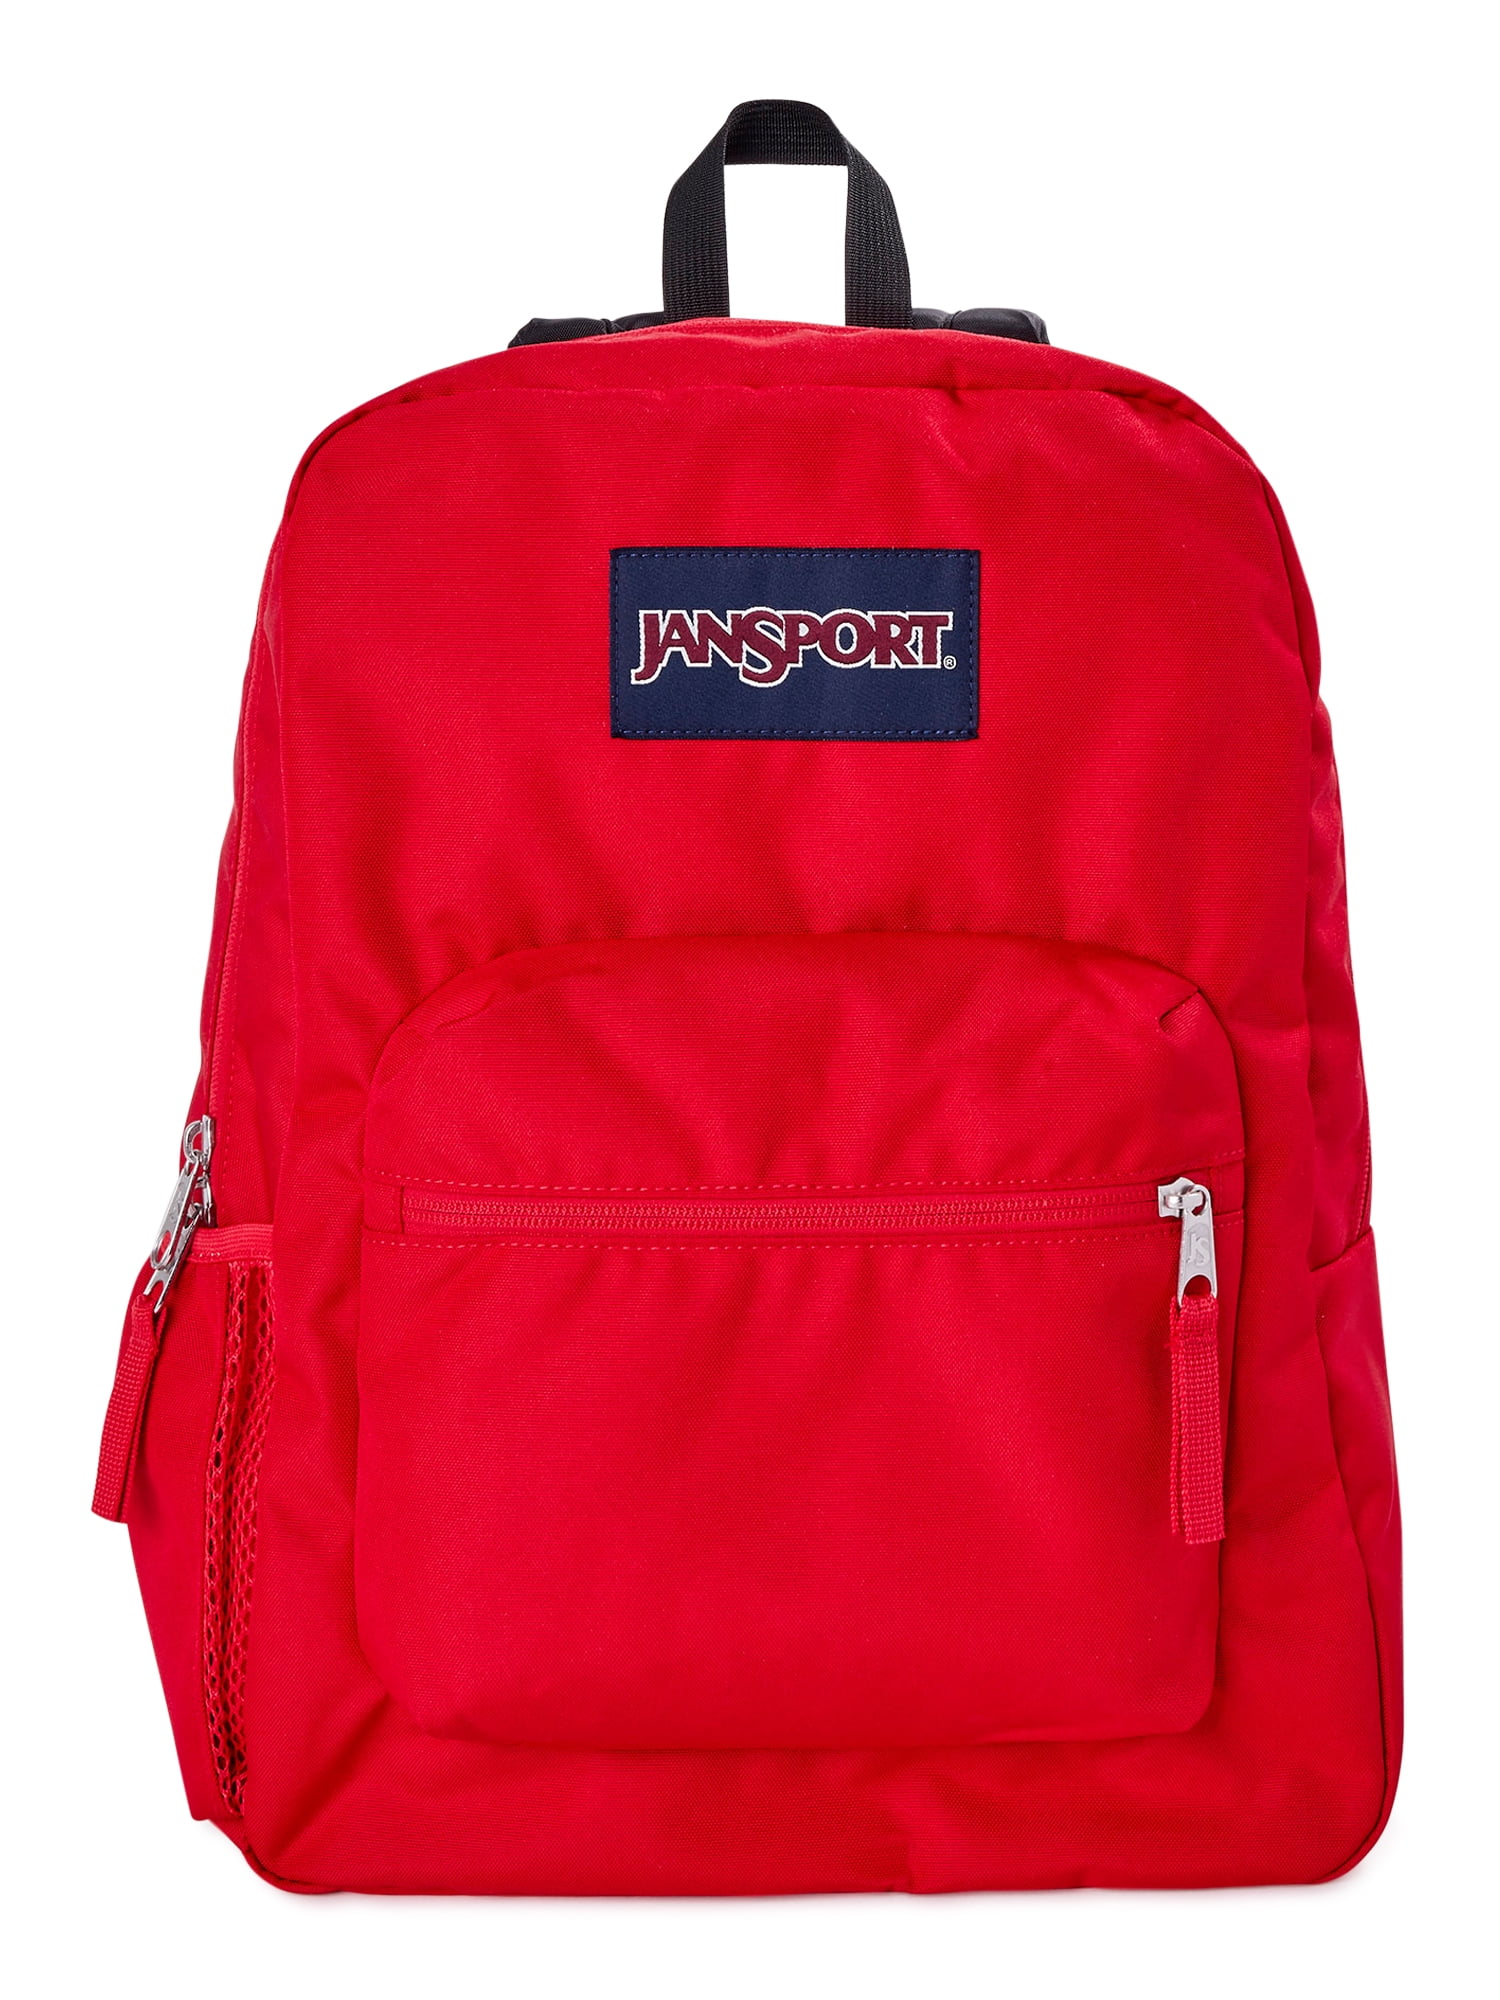 accept Leonardoda humor JanSport Unisex Cross Town Backpack School Bag Red Tape - Walmart.com